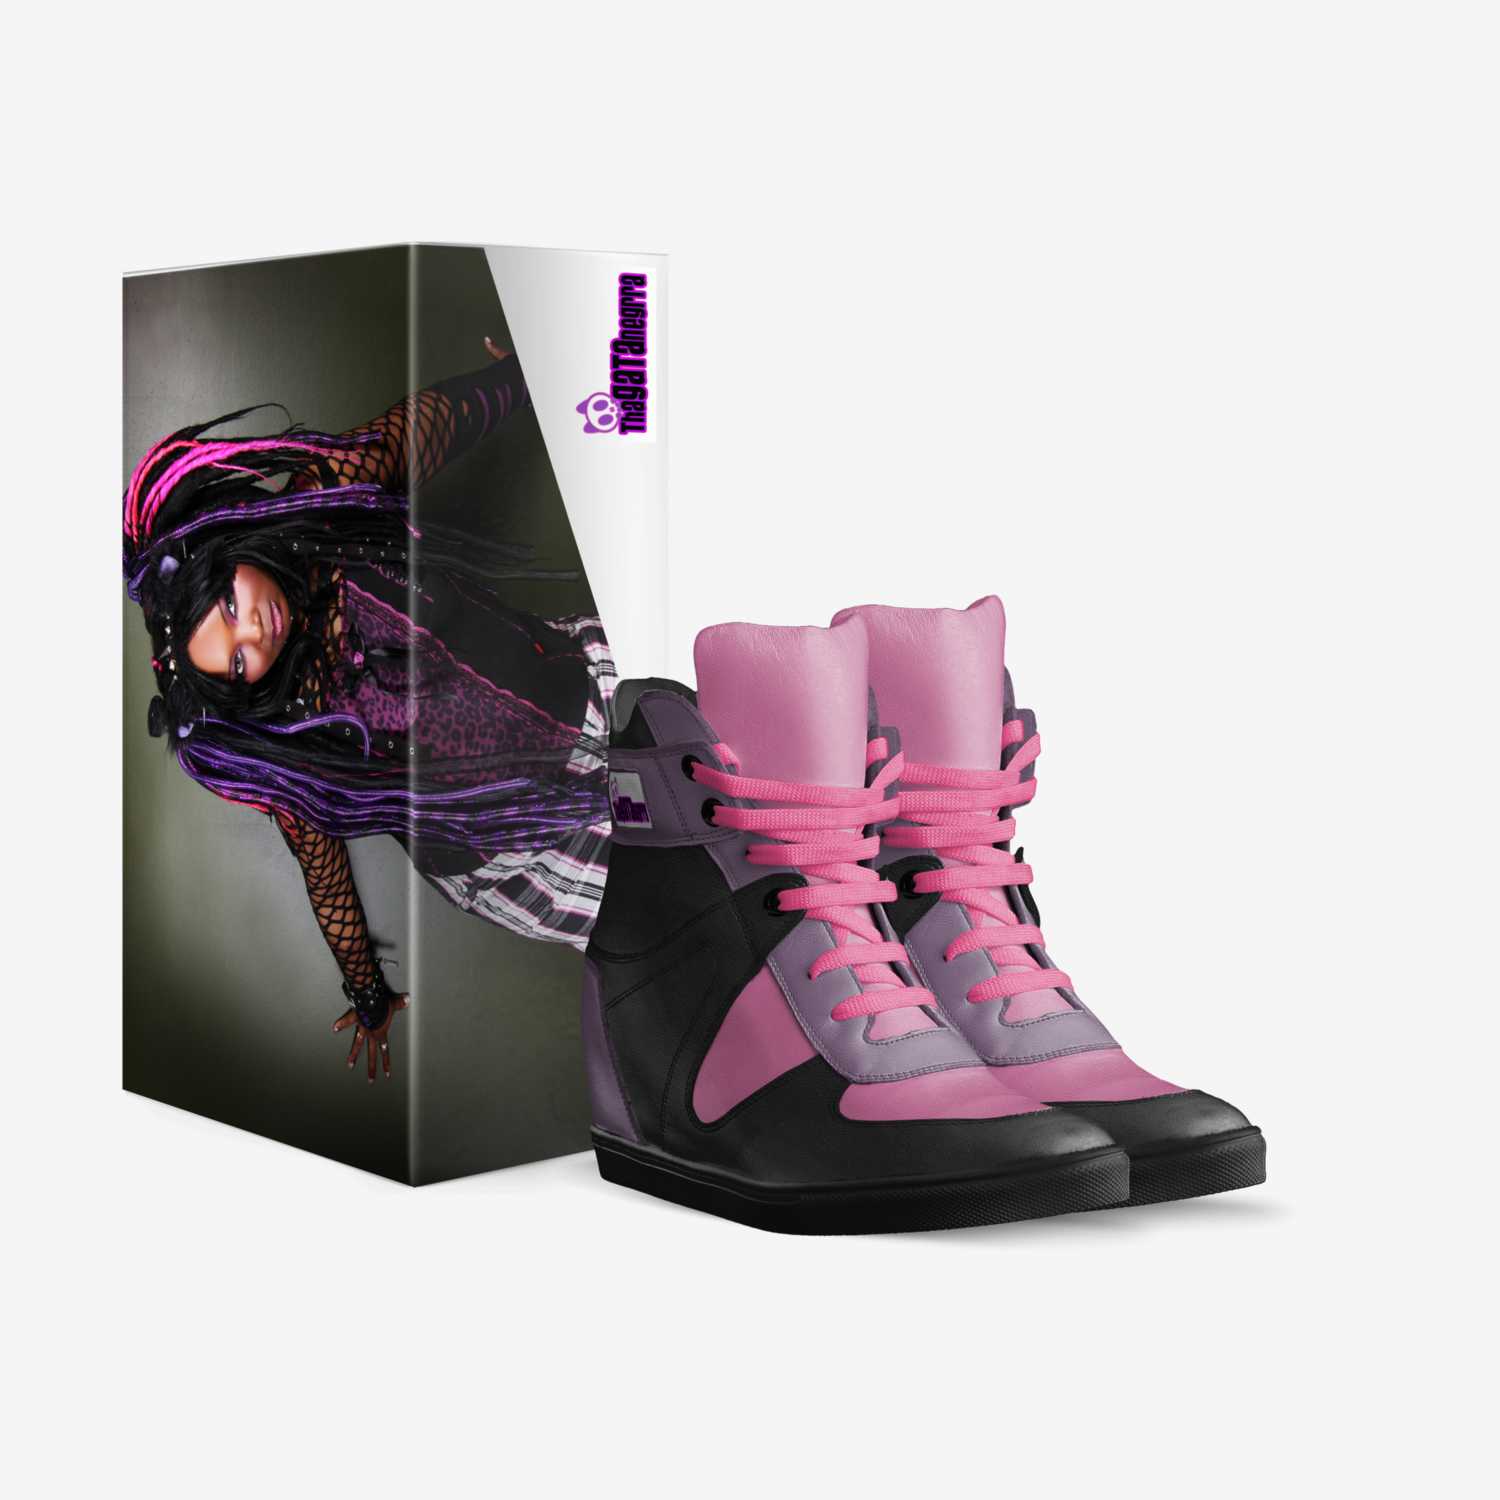 #NYANVIDA custom made in Italy shoes by Tha Gata Negrra | Box view